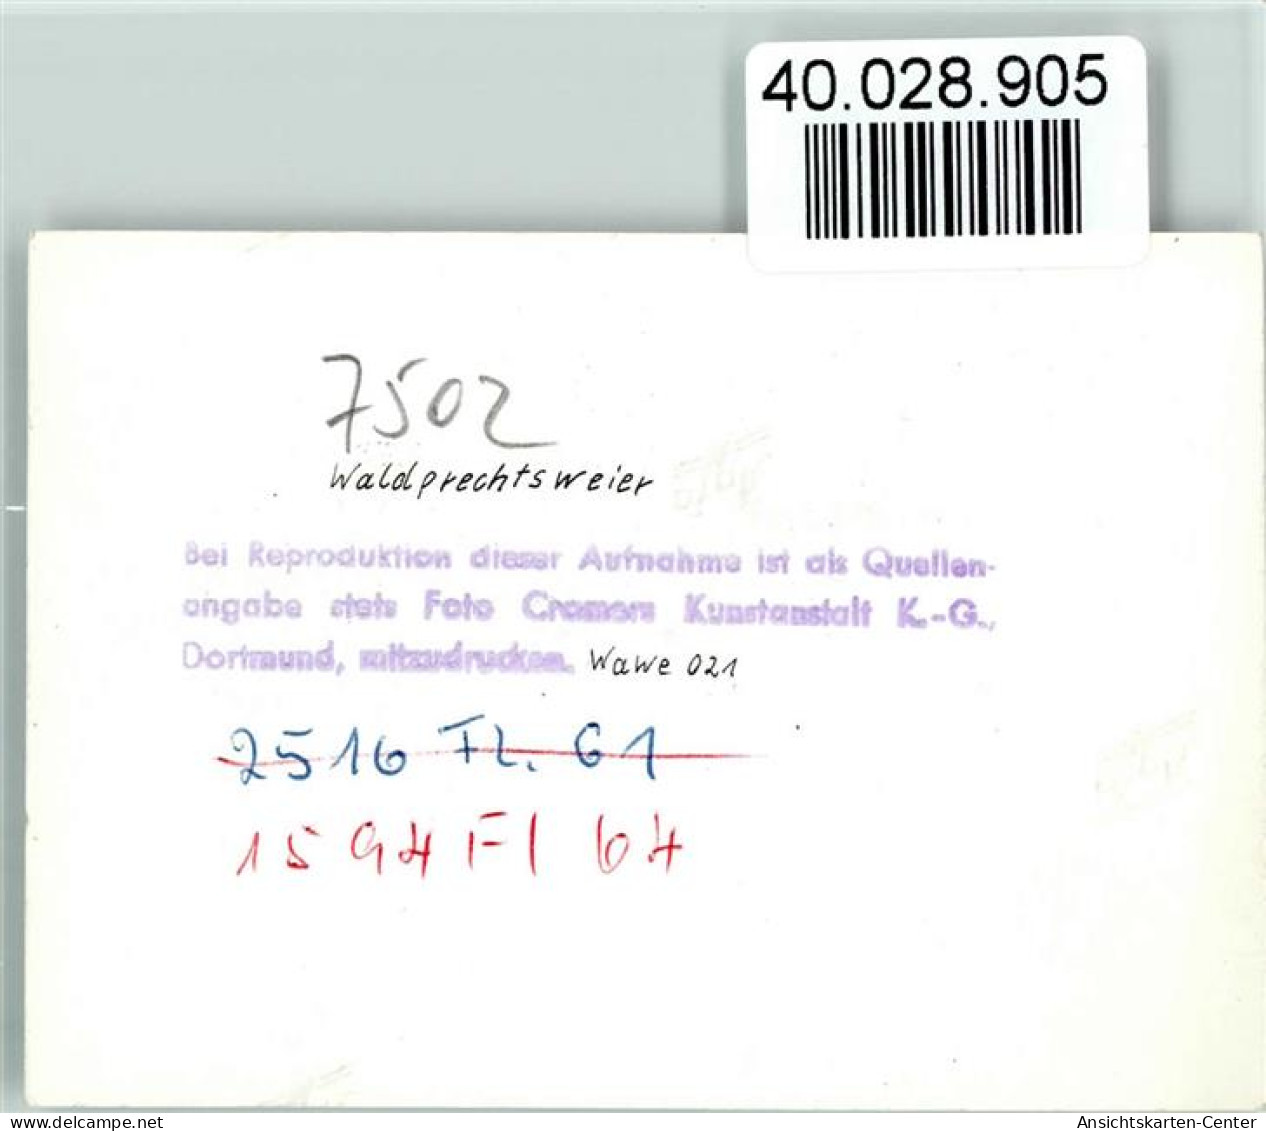 40028905 - Waldprechtsweier - Karlsruhe